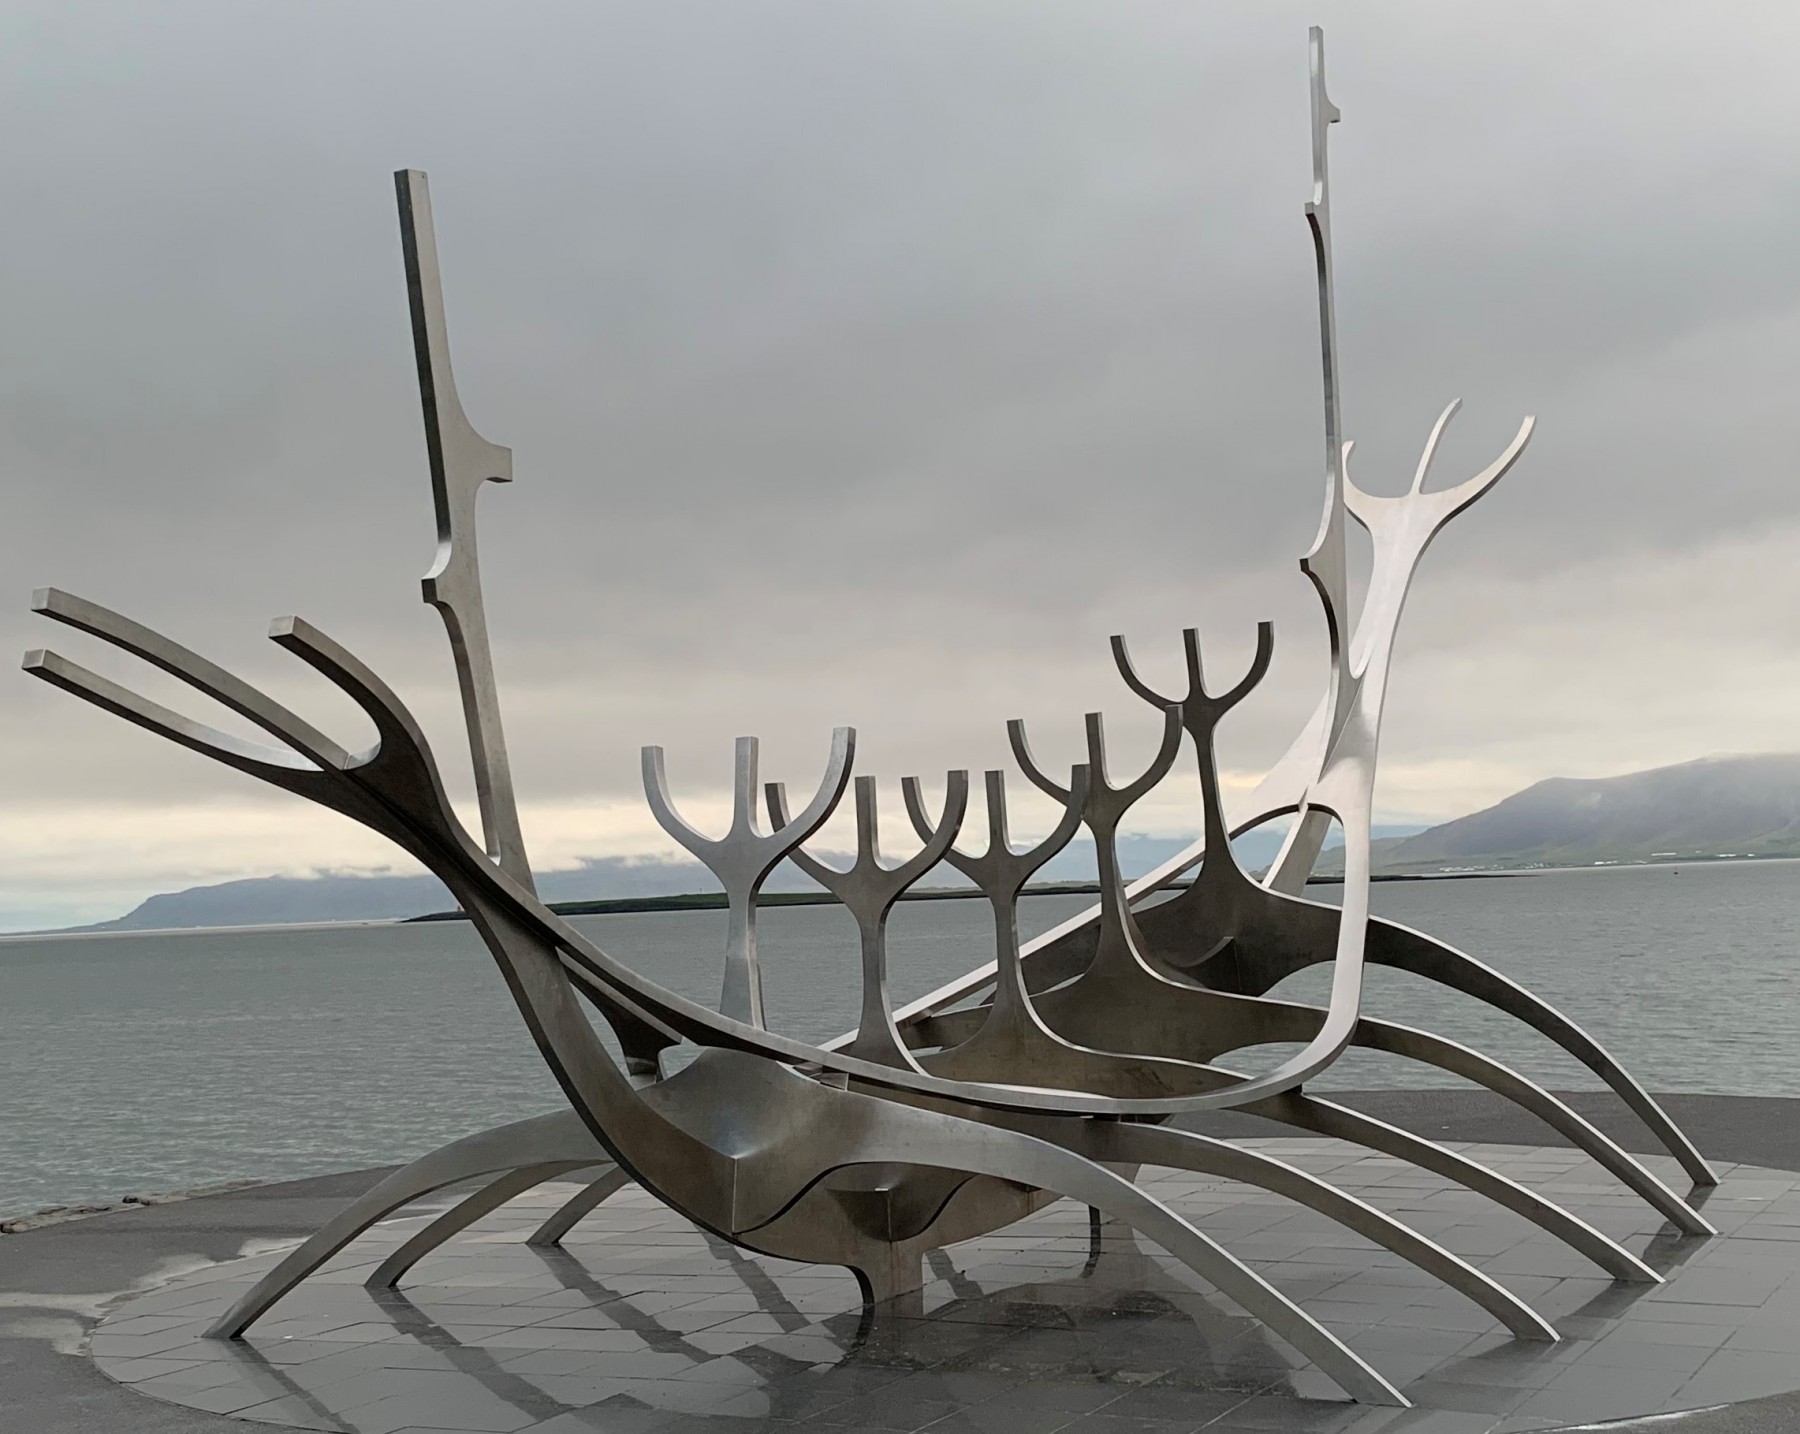 Sólfar, a gleaming stainless steel sculpture by Jón Gunnar Árnason